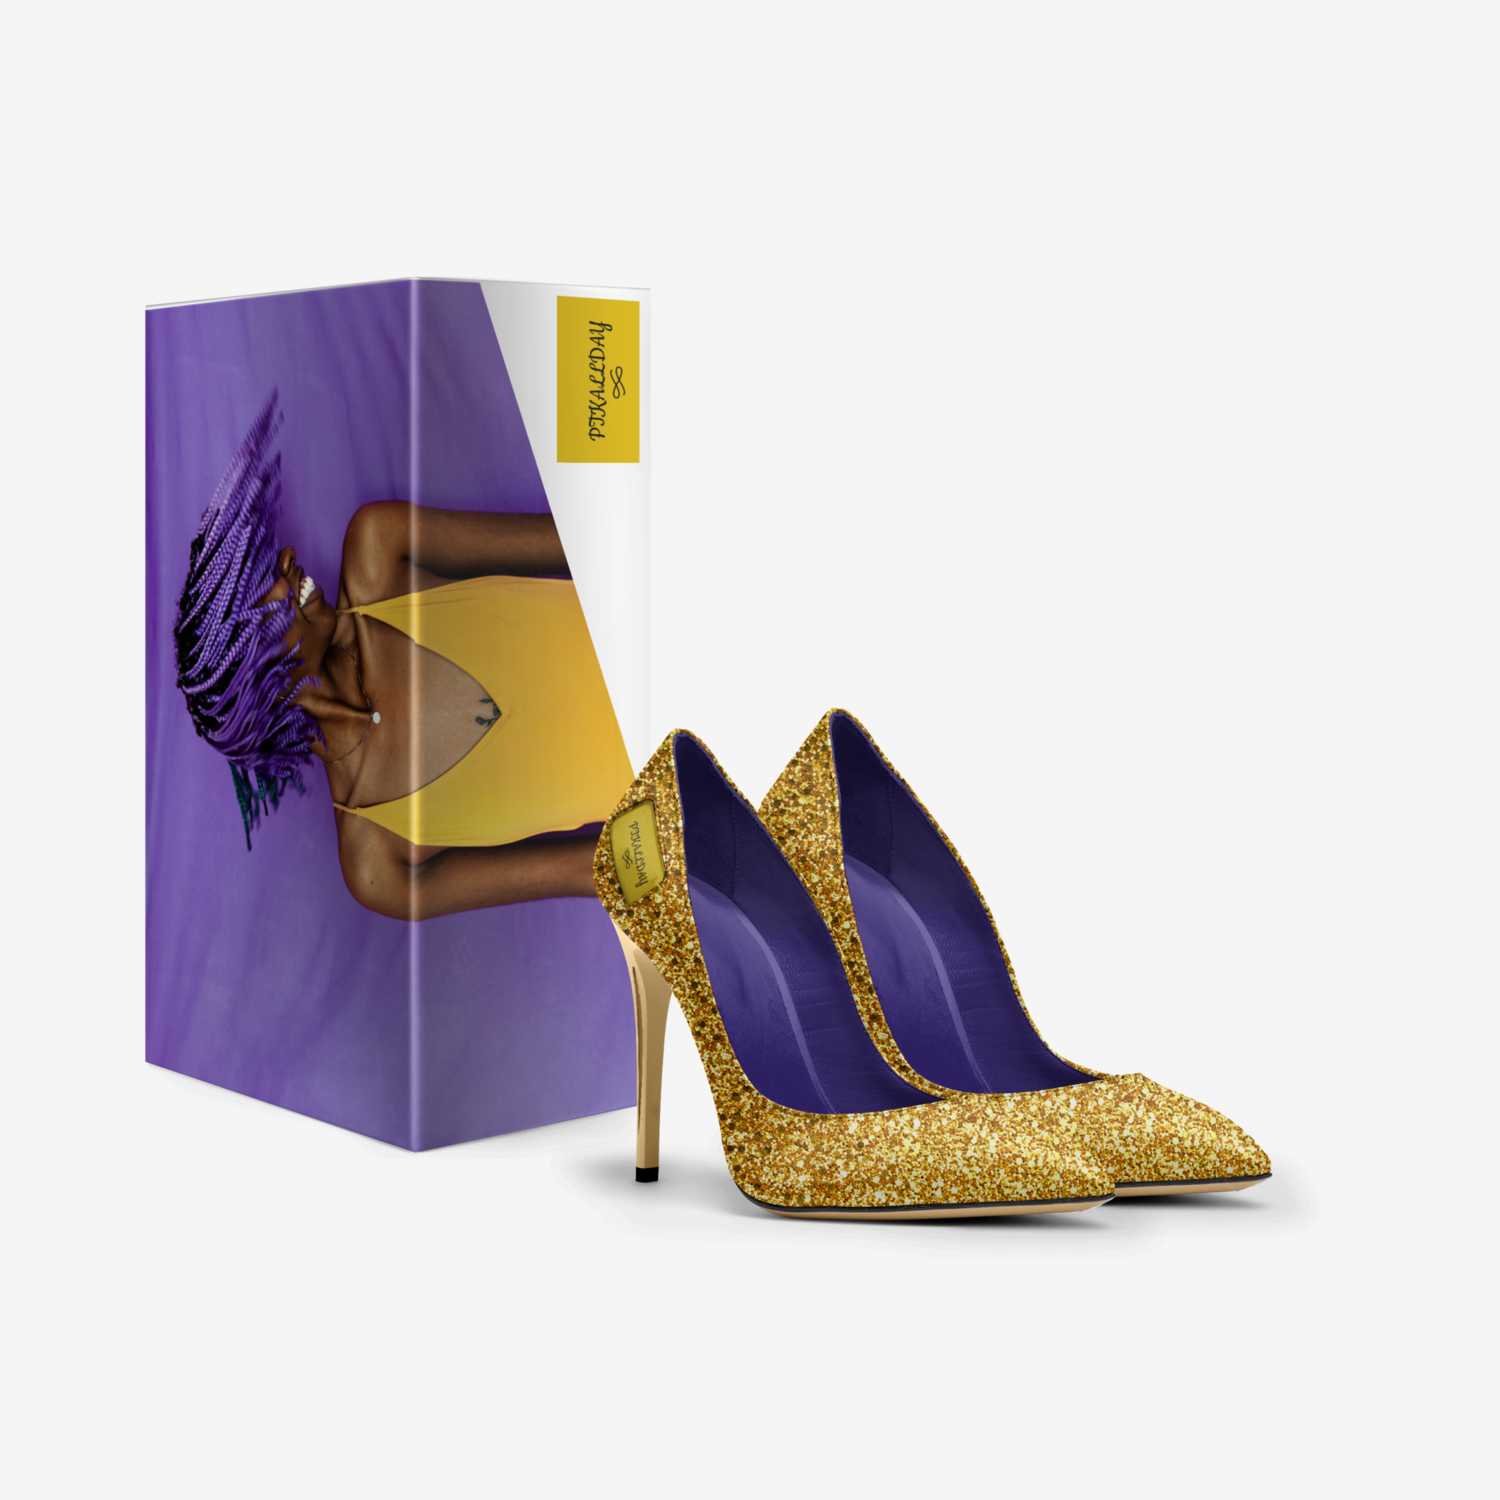 FUNKY FAITH custom made in Italy shoes by Charmaine Bettysingleton | Box view